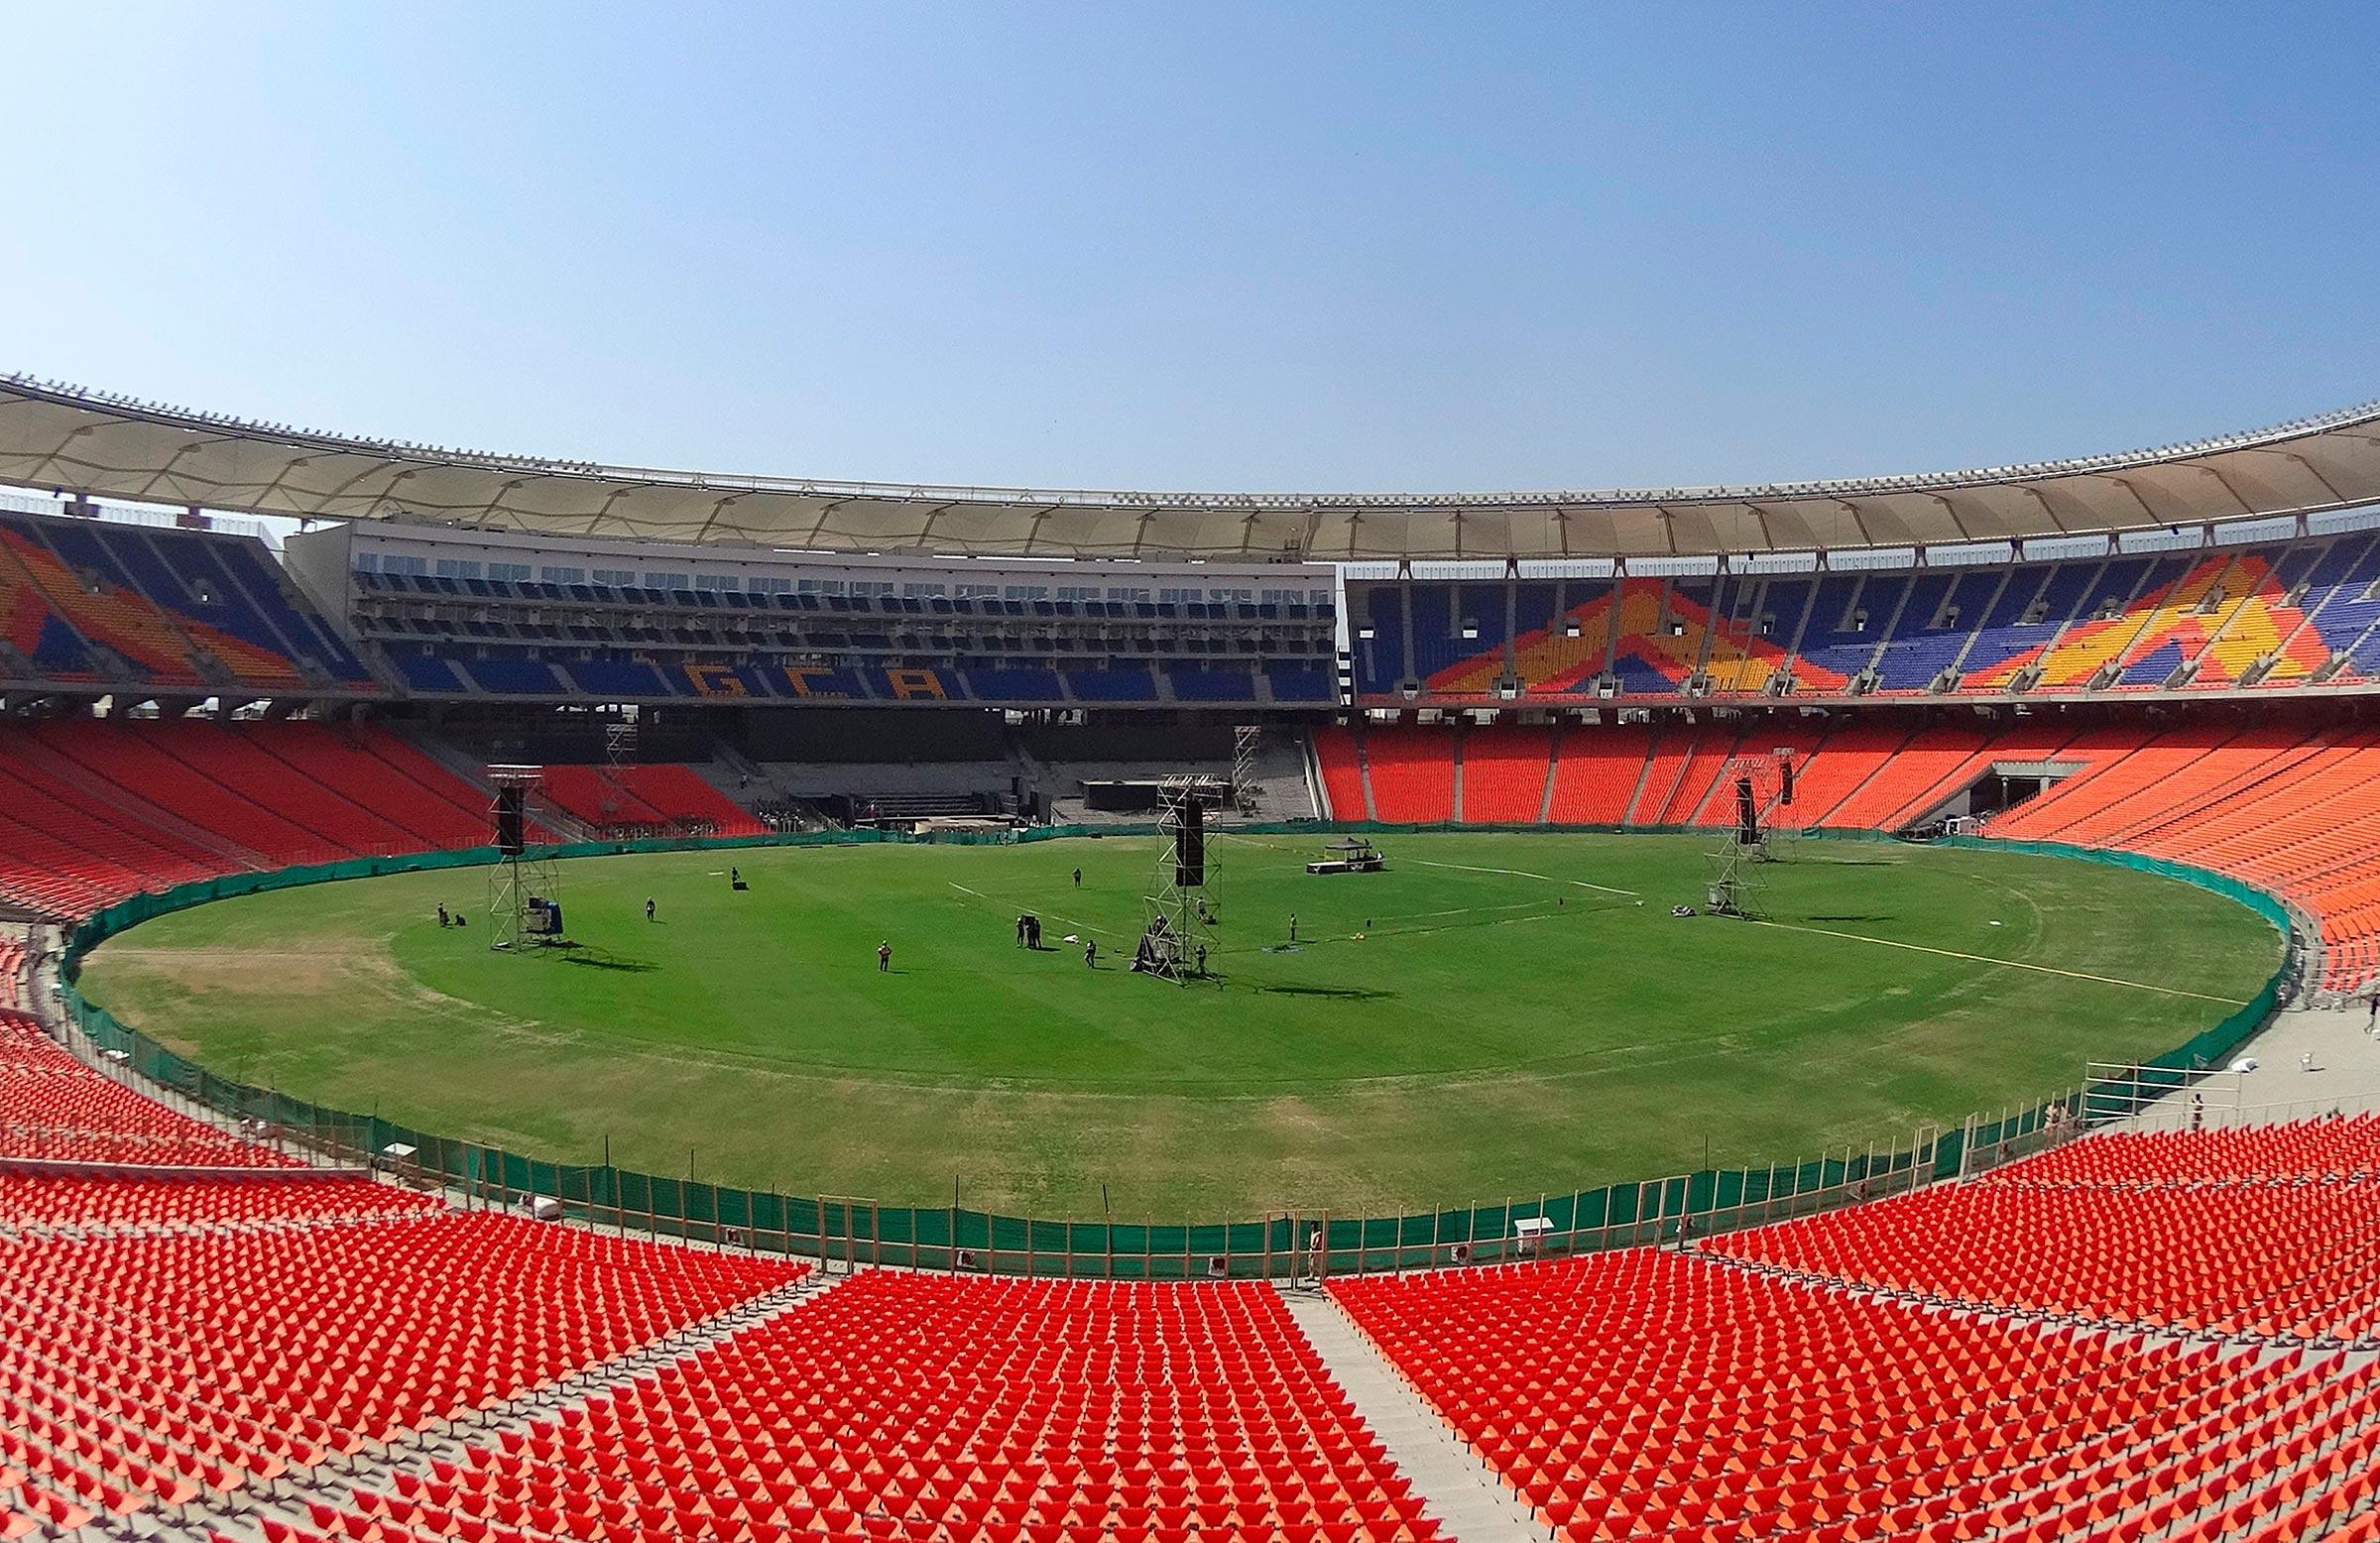 World's biggest cricket stadium set for first match 2022_40.1